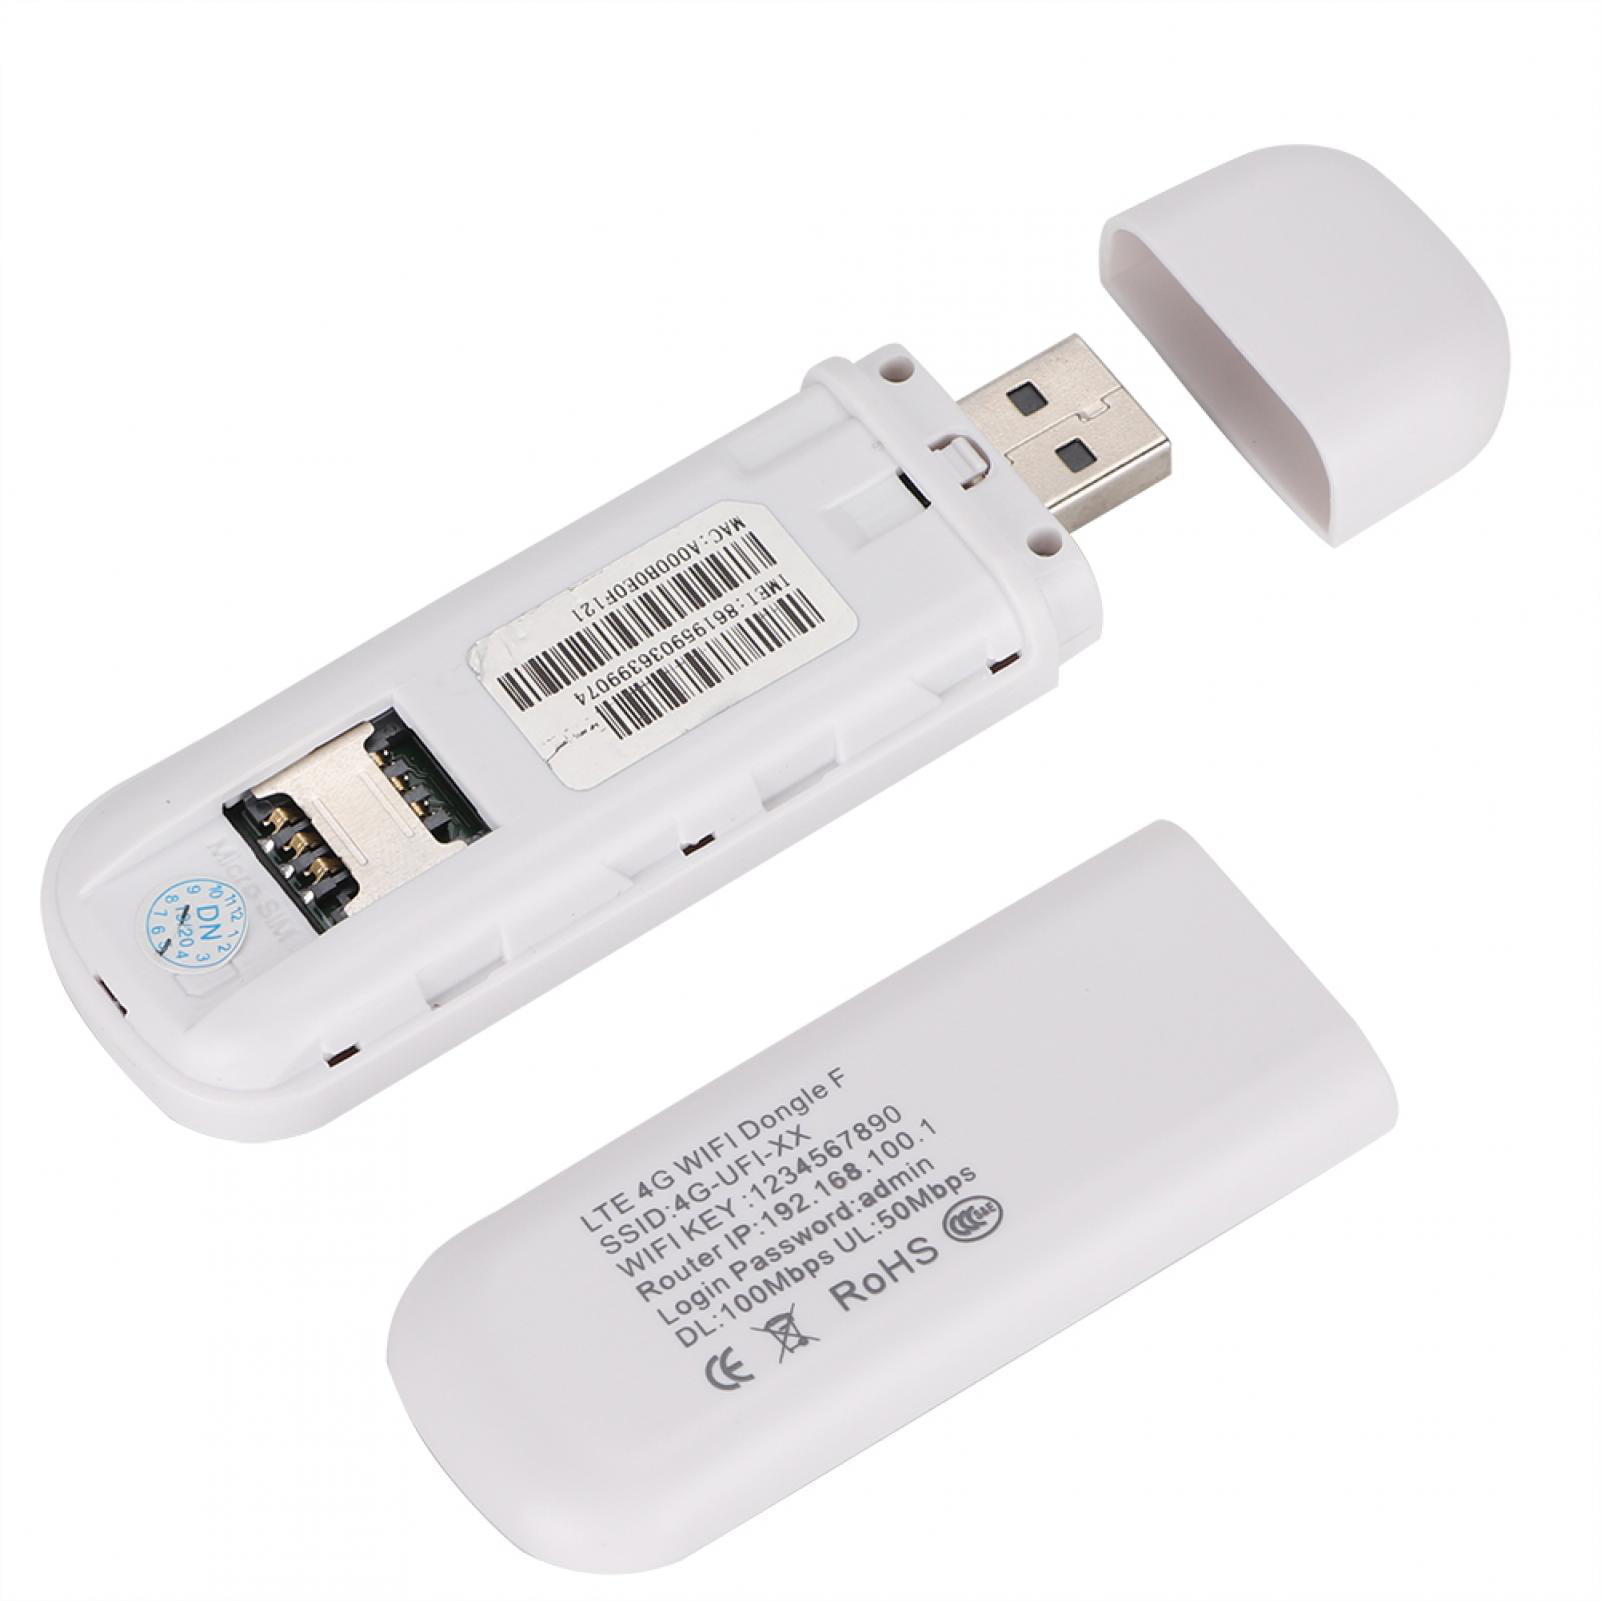 Интернет стик купить. WIFI стик. SIM модем. Mikrotik USB Modem Stick. Router on a Stick.